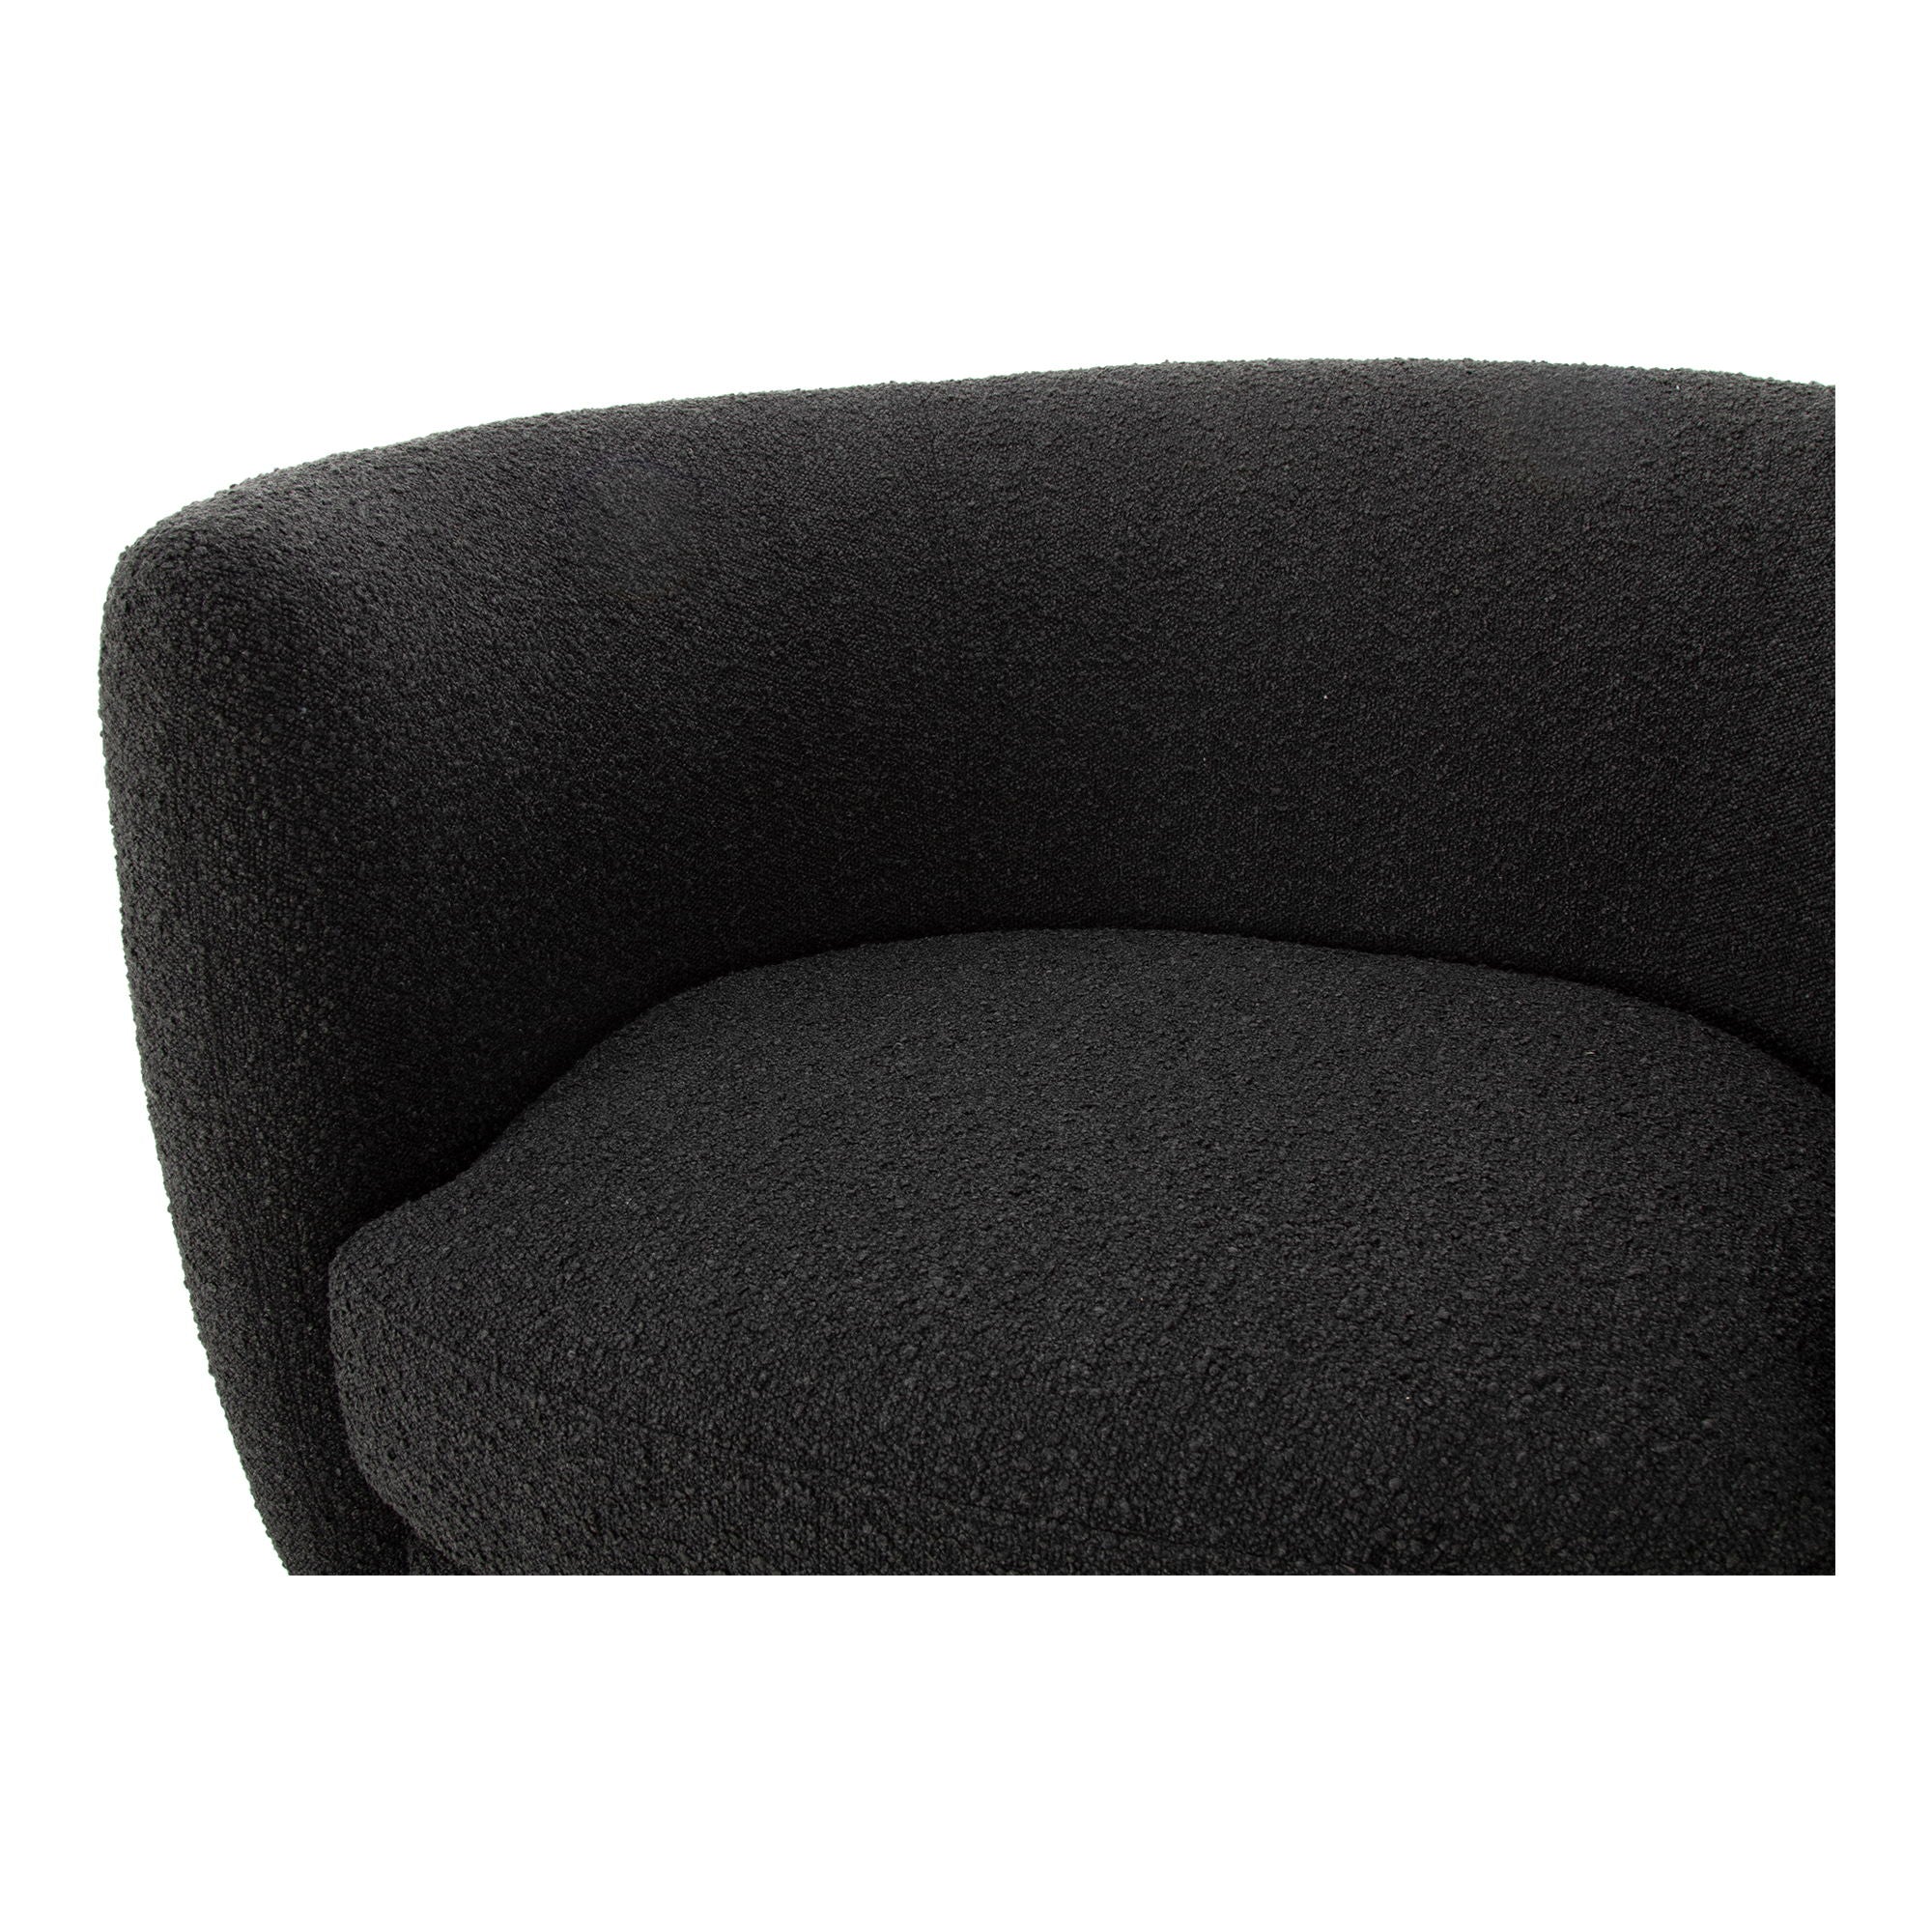 Koba - Chair - Black